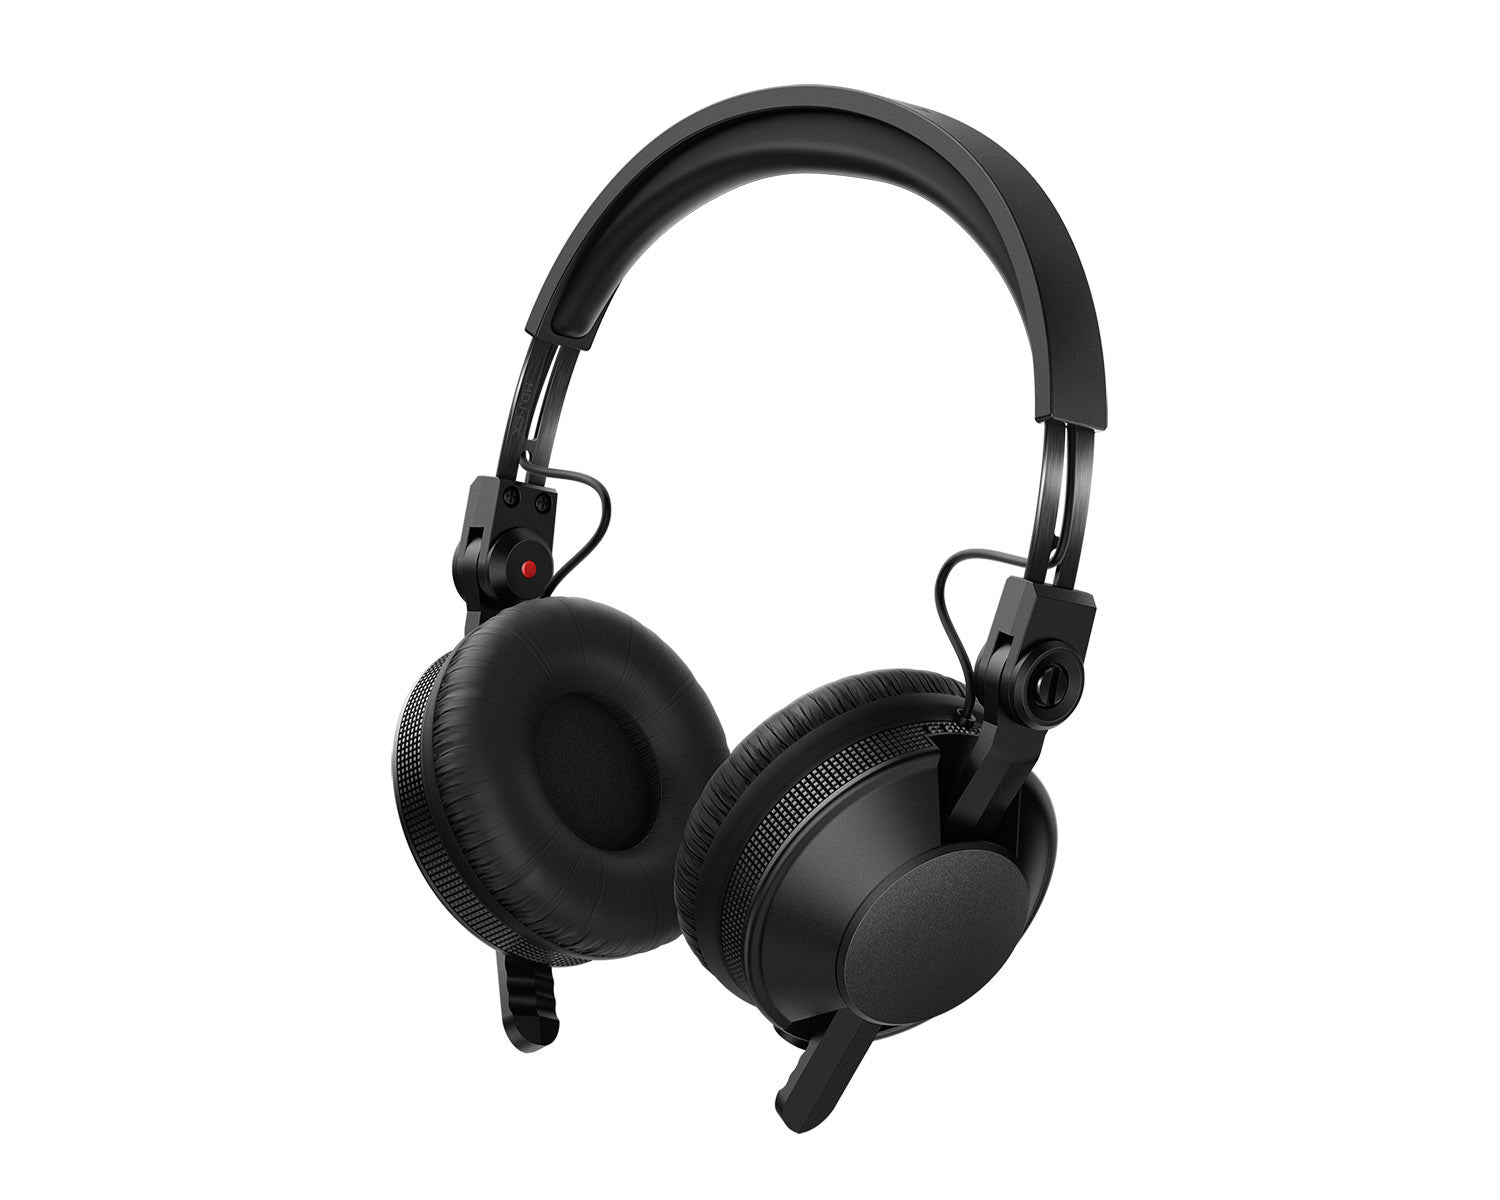 HDJ-CX Professional On-Ear DJ Headphones Black